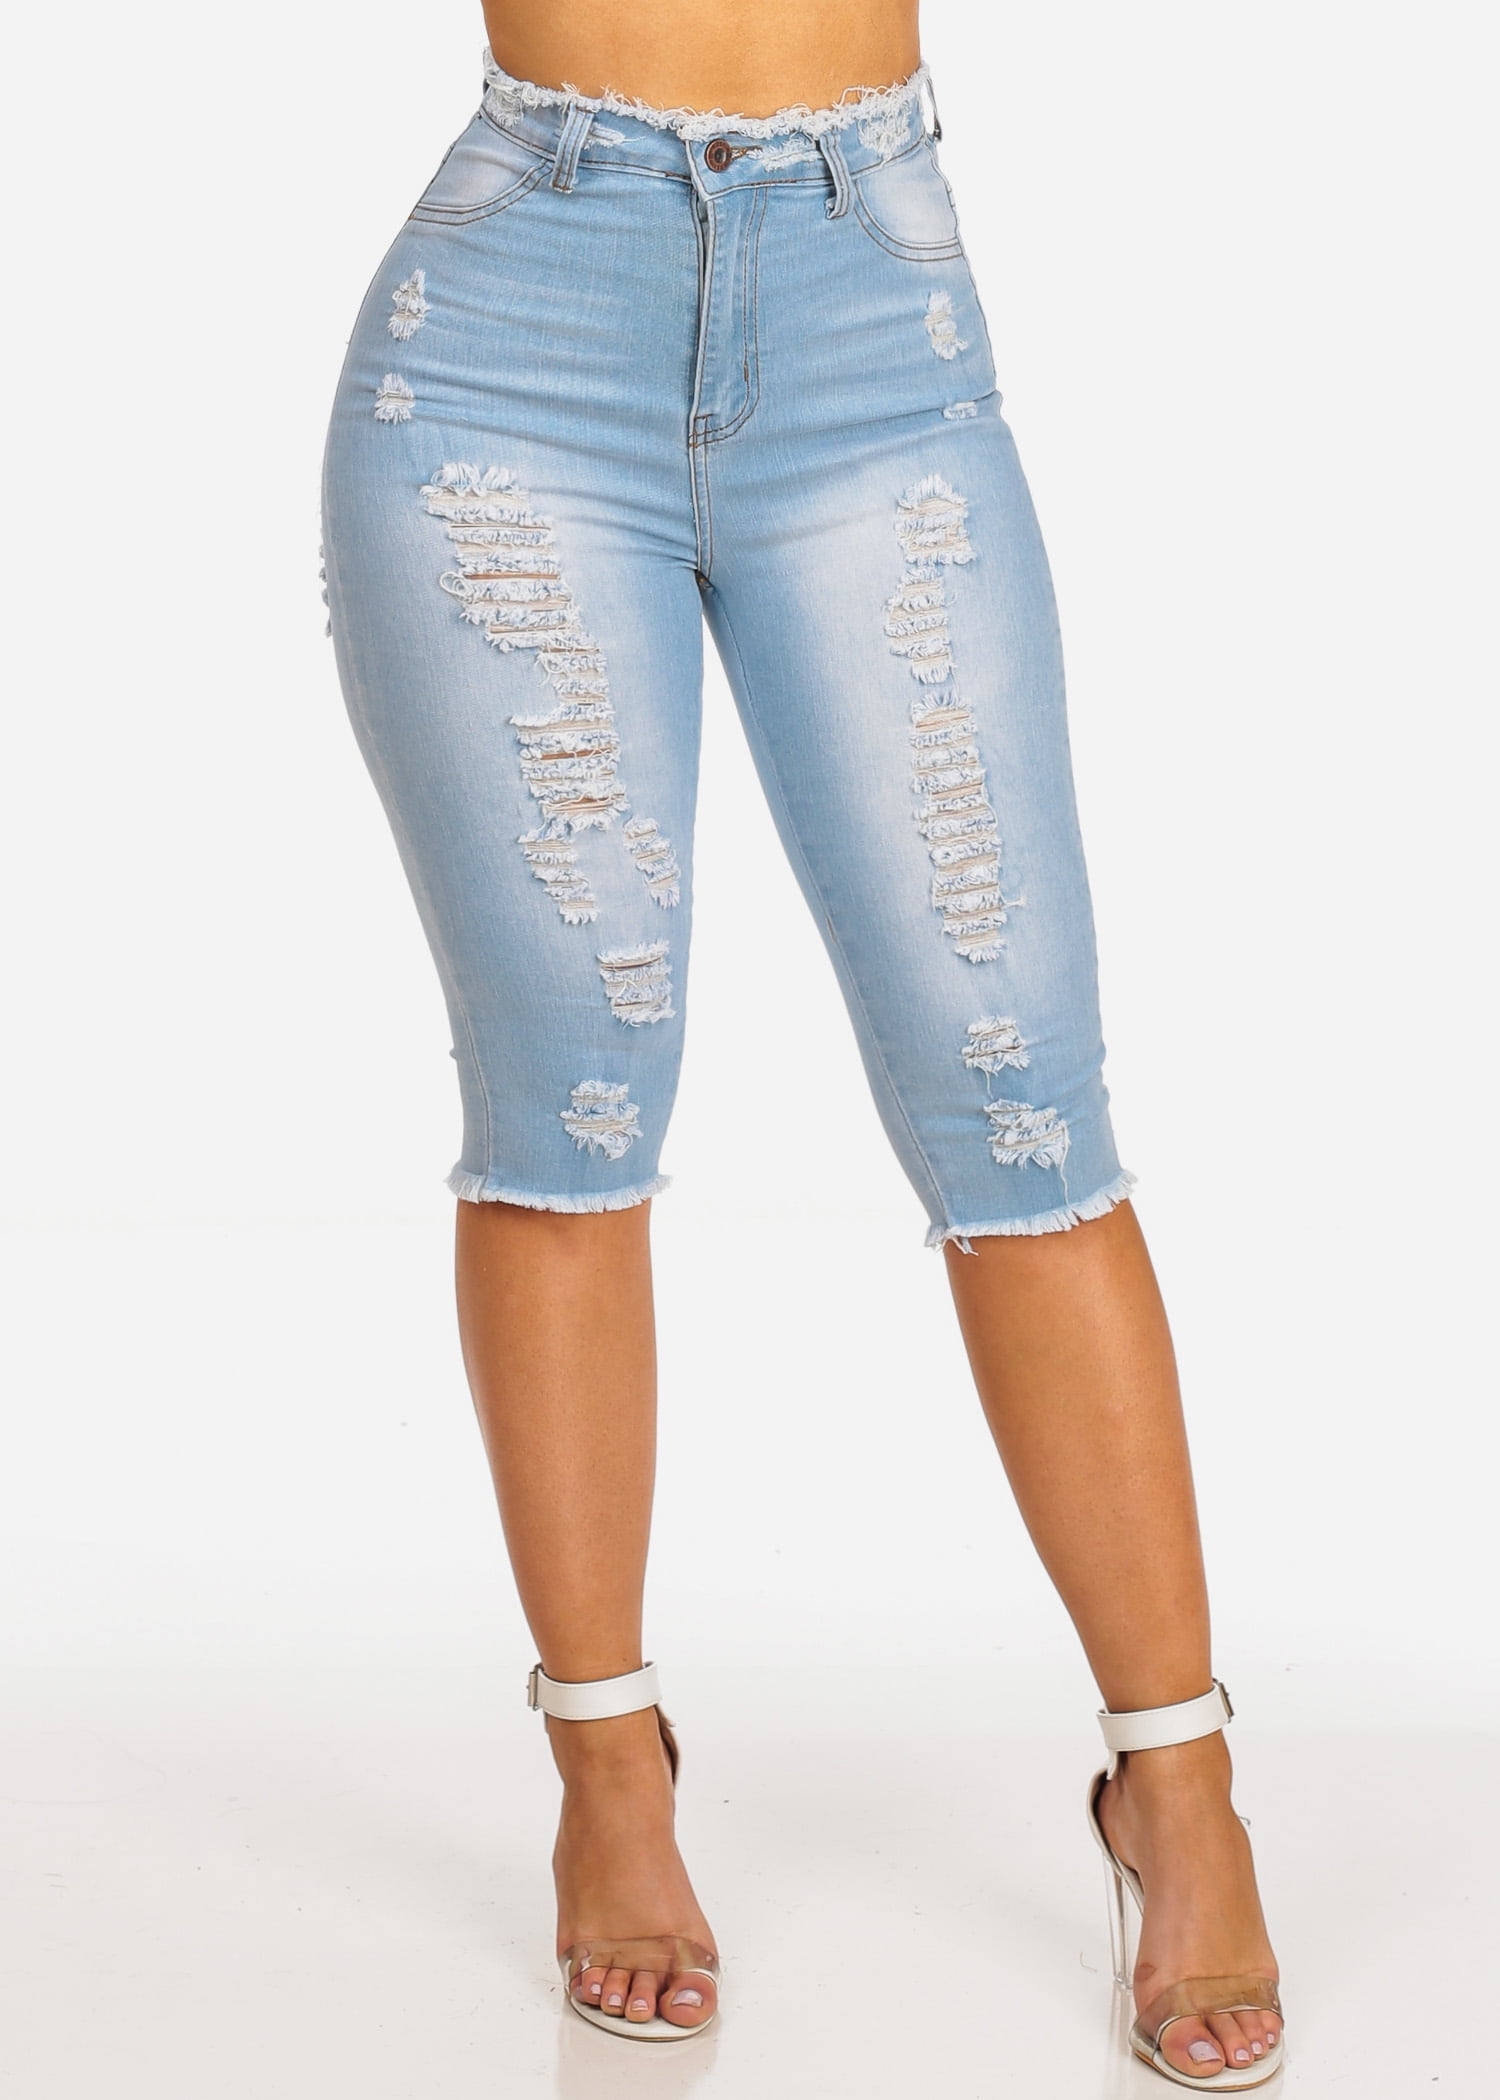 ripped jean capri shorts